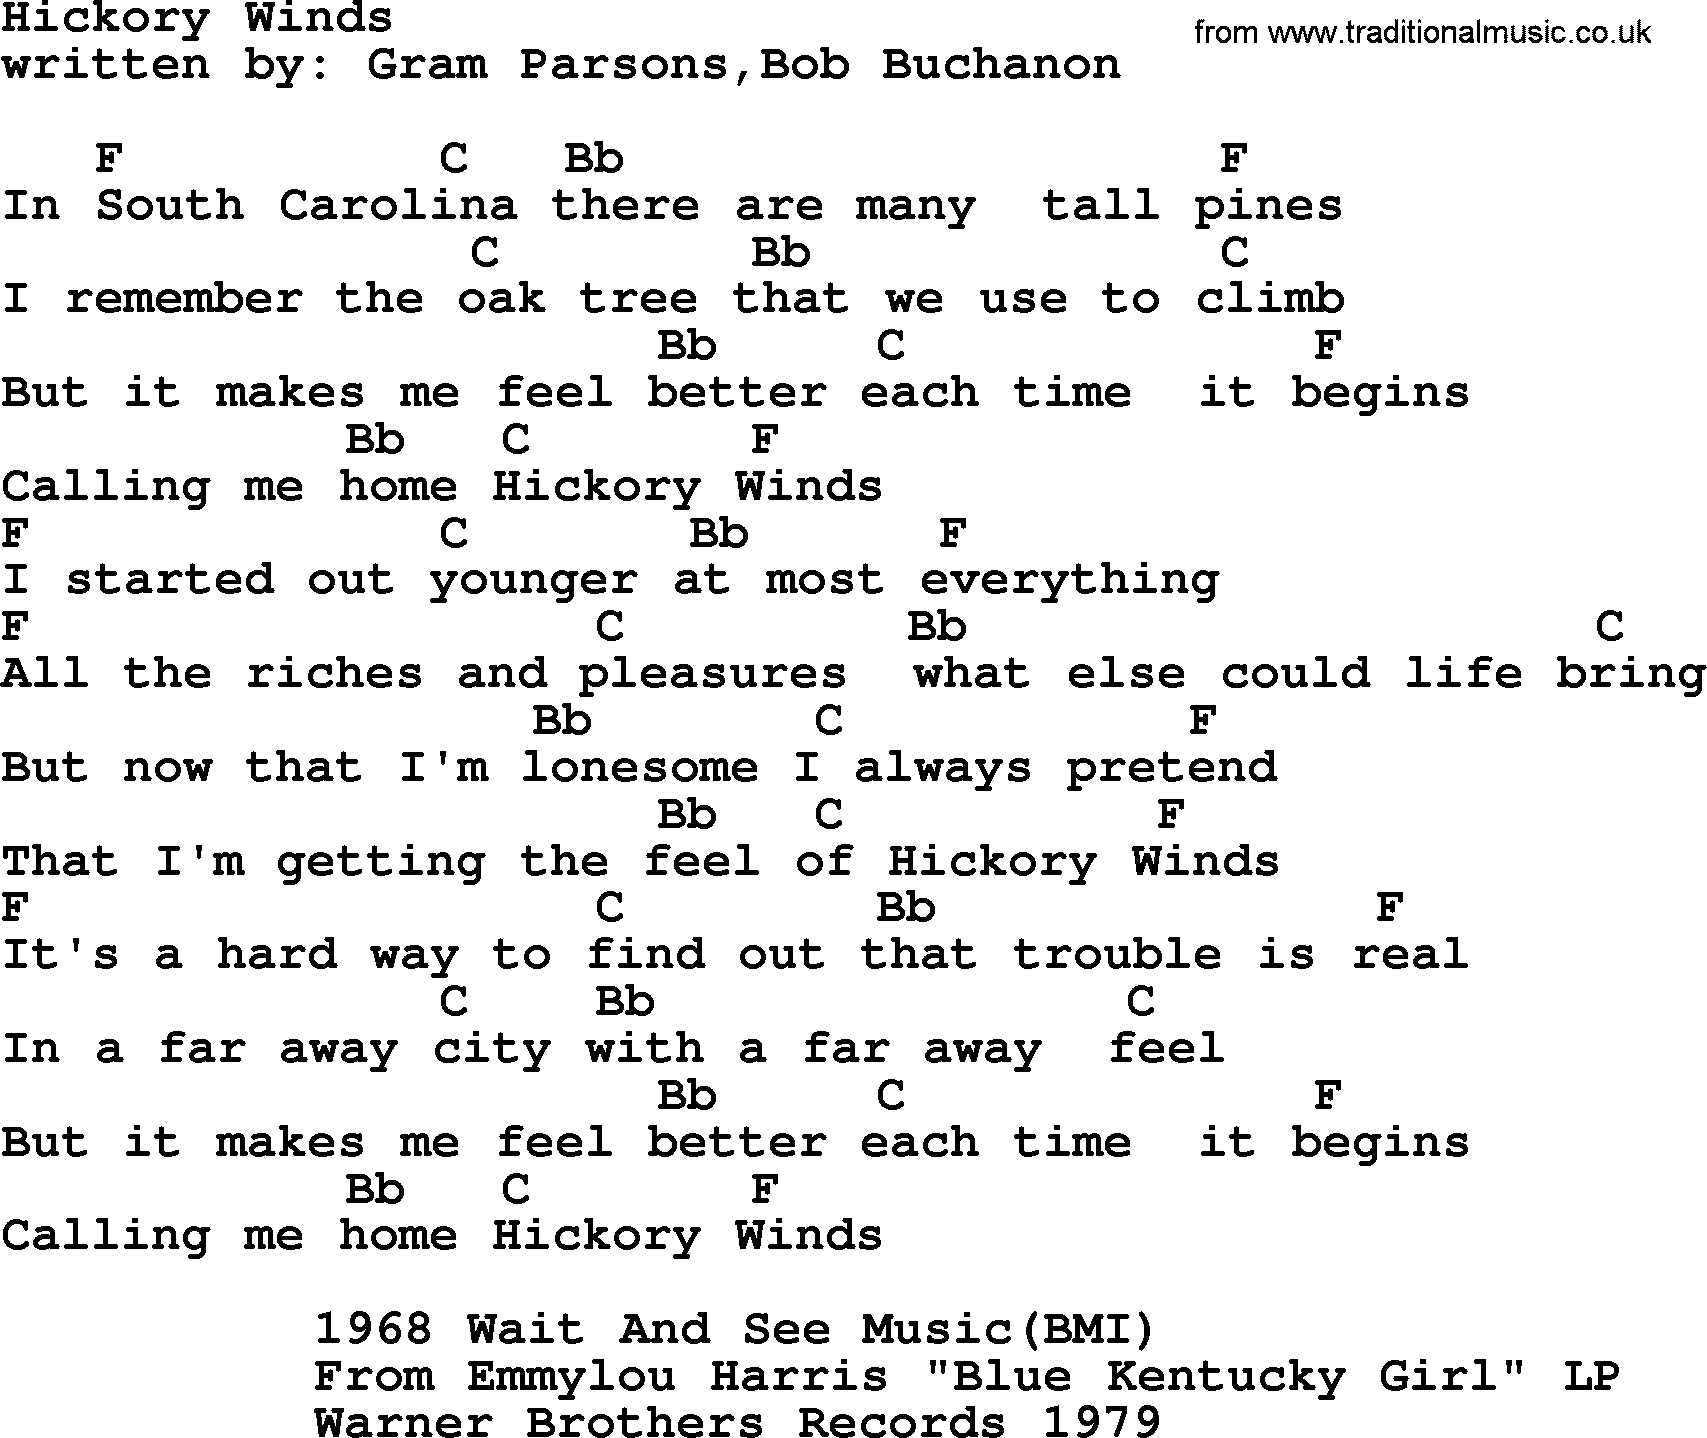 Emmylou Harris song: Hickory Winds lyrics and chords